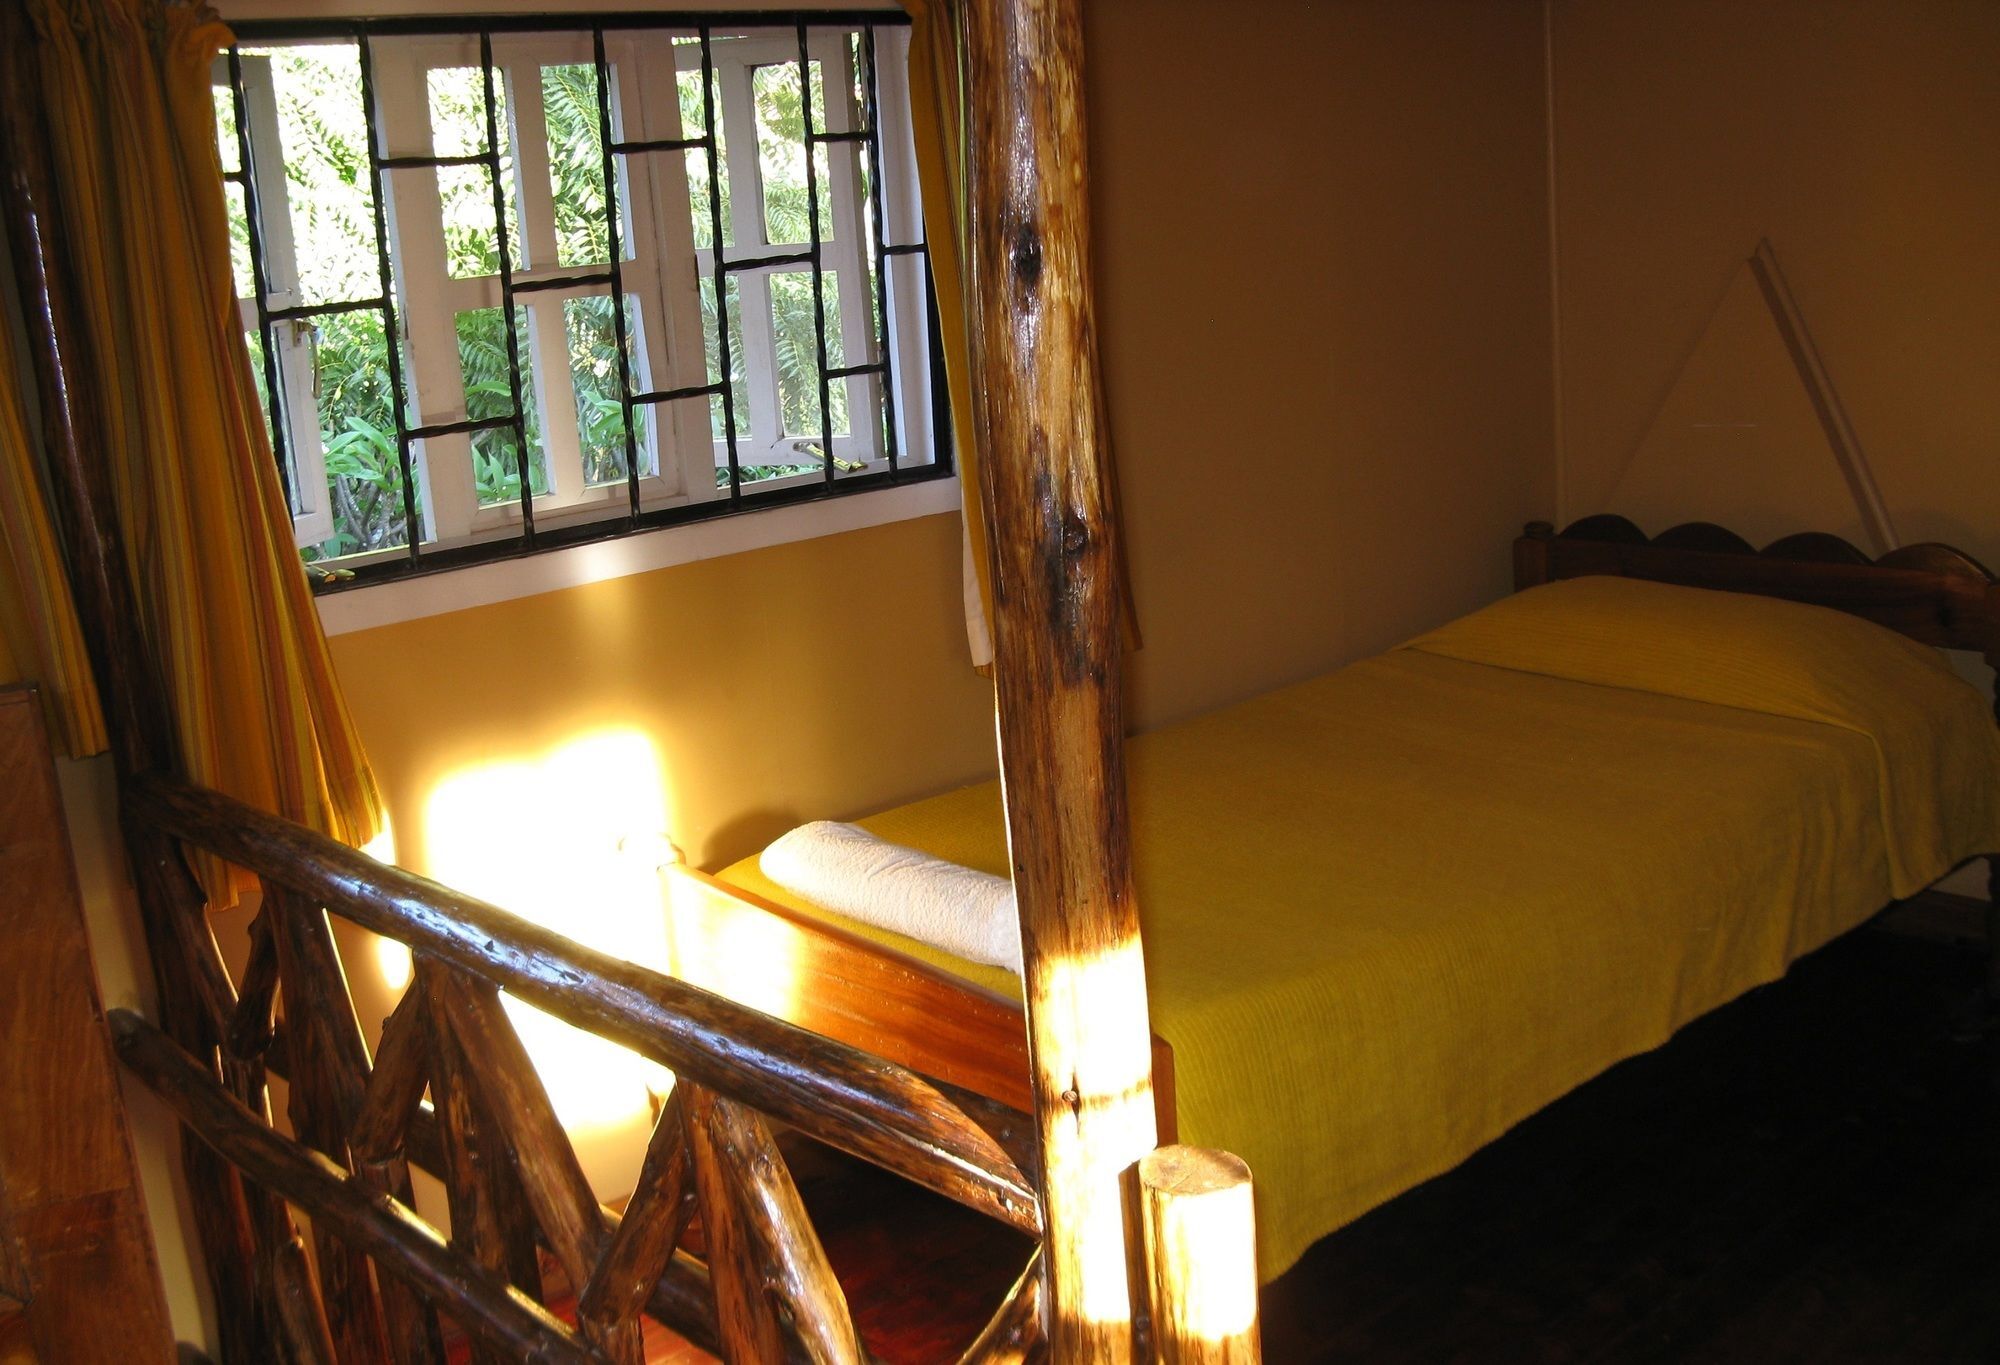 Kiloran House Hotel Nairobi Exterior photo